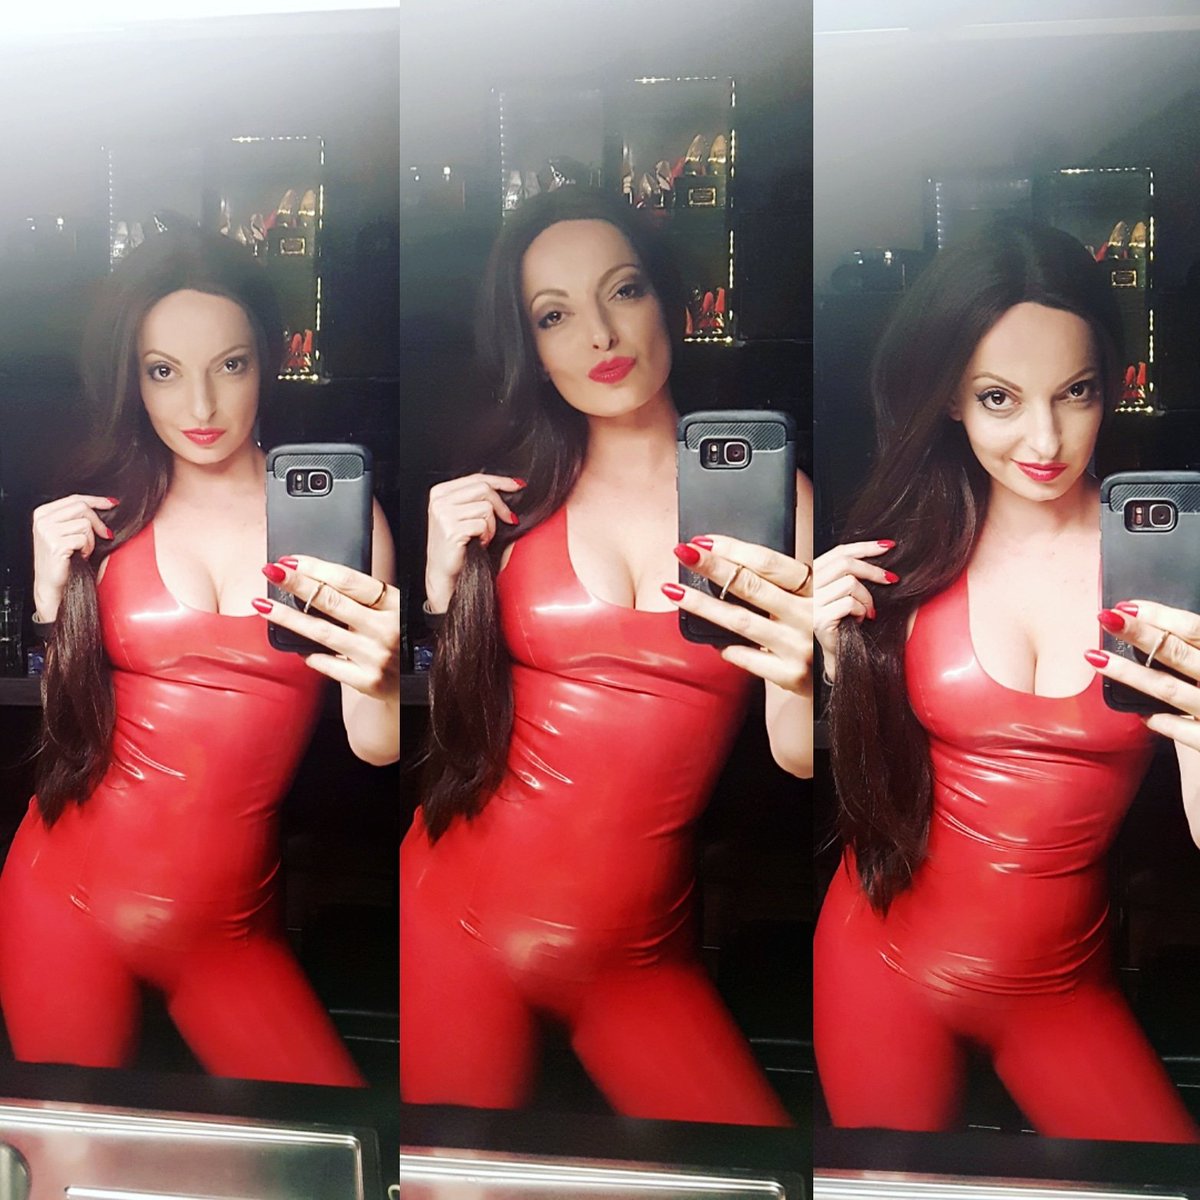 #red #redlips #rednails #redlatex #redoutfit #latex #latextop #latexleggings #leggings 

🔴🔴 LATEXTOP 🔴🔴 🔝✔
🔴🔴 @Xalatex 🔴🔴

#werbung #wig #divasdome #divanova #cologne